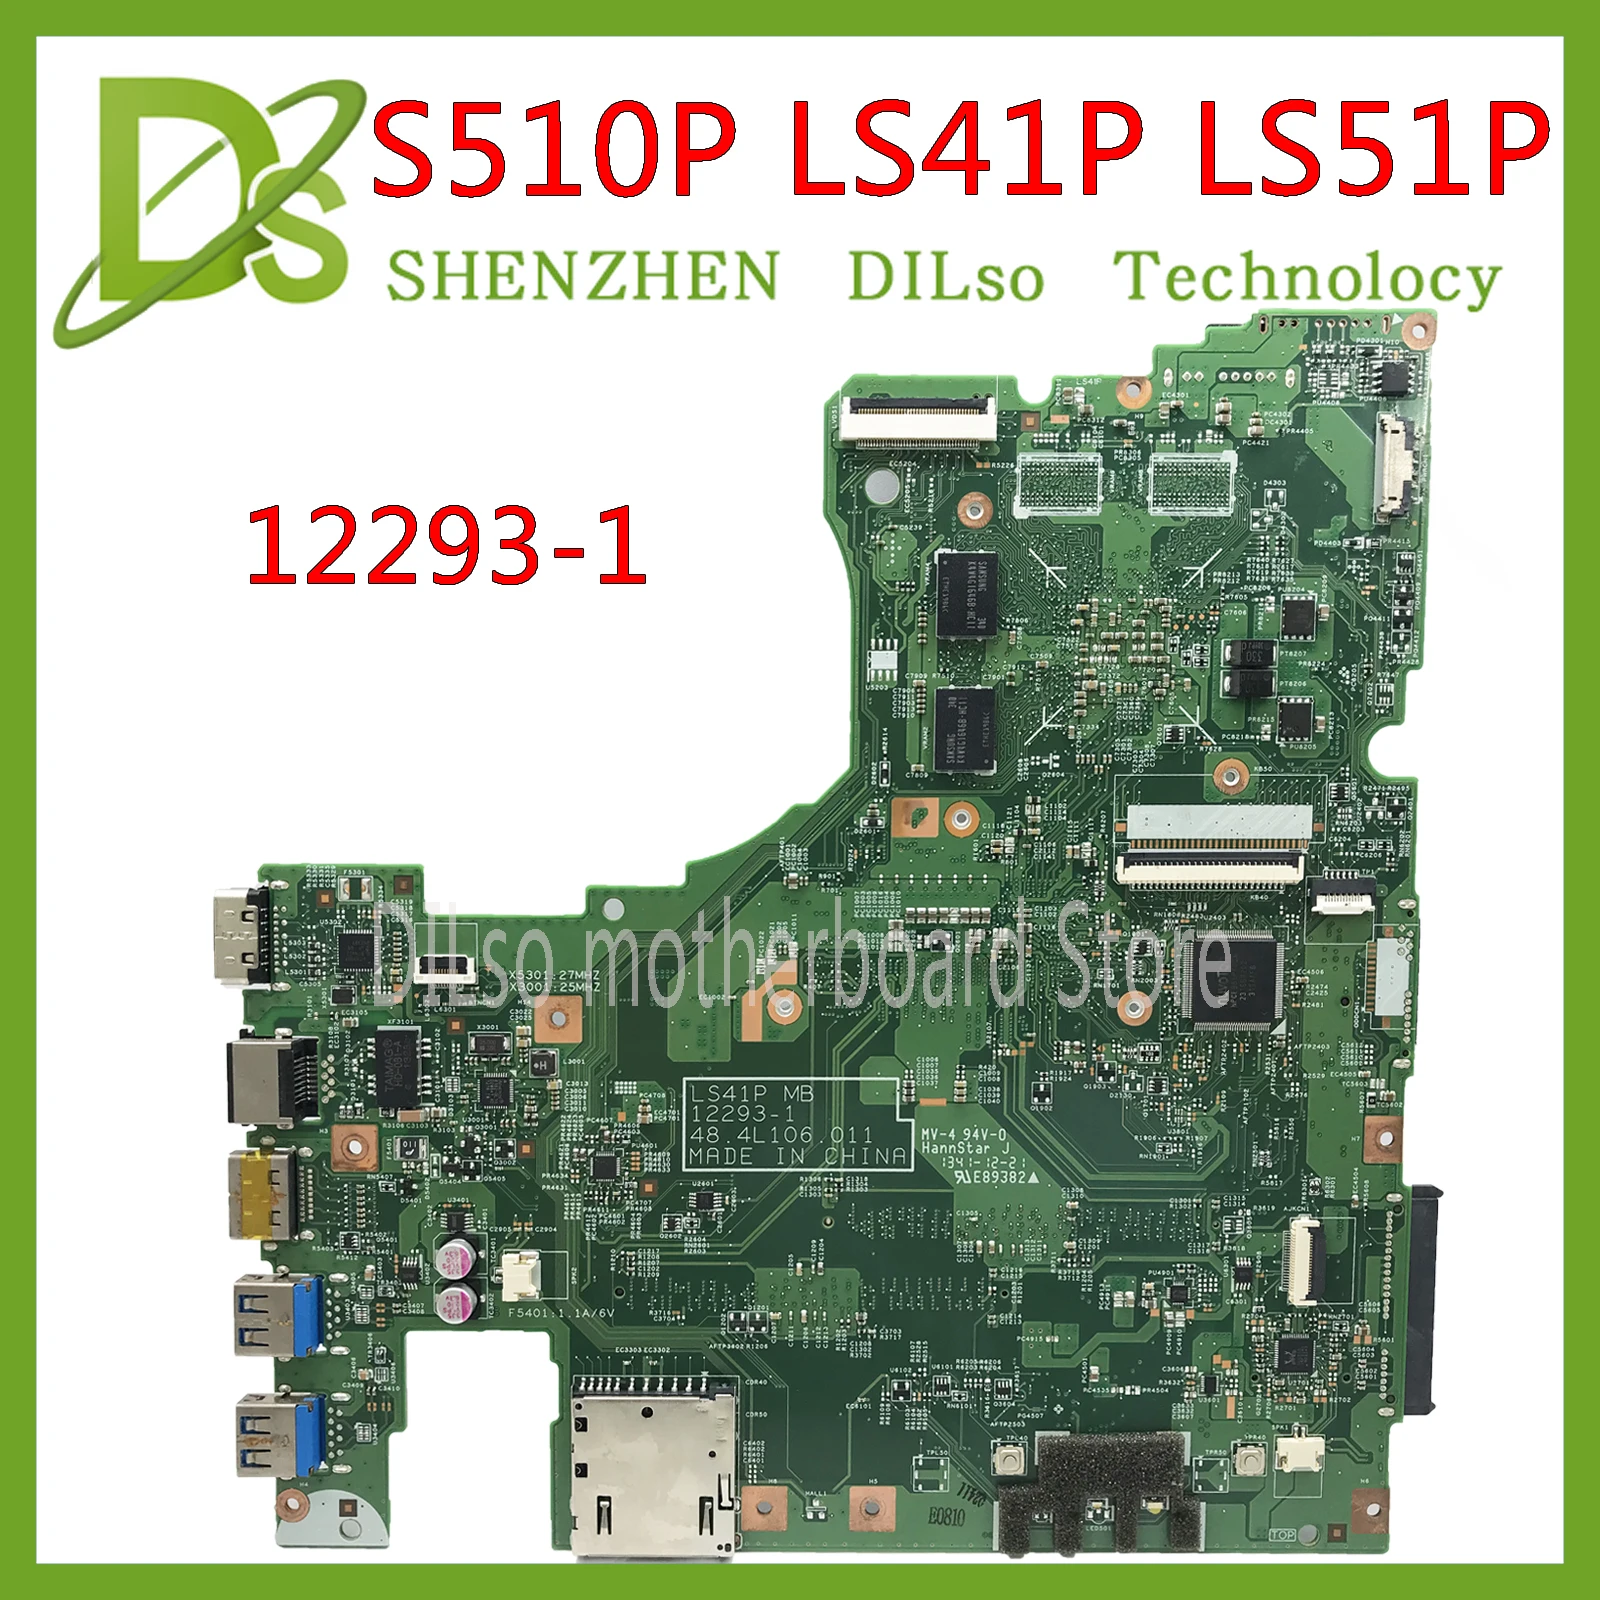 80% OFF  KEFU 12293-1 48.4L106.011 motherboard for Lenovo S510P LS41P LS51P motherboard I5-4200U CPU GT720M-